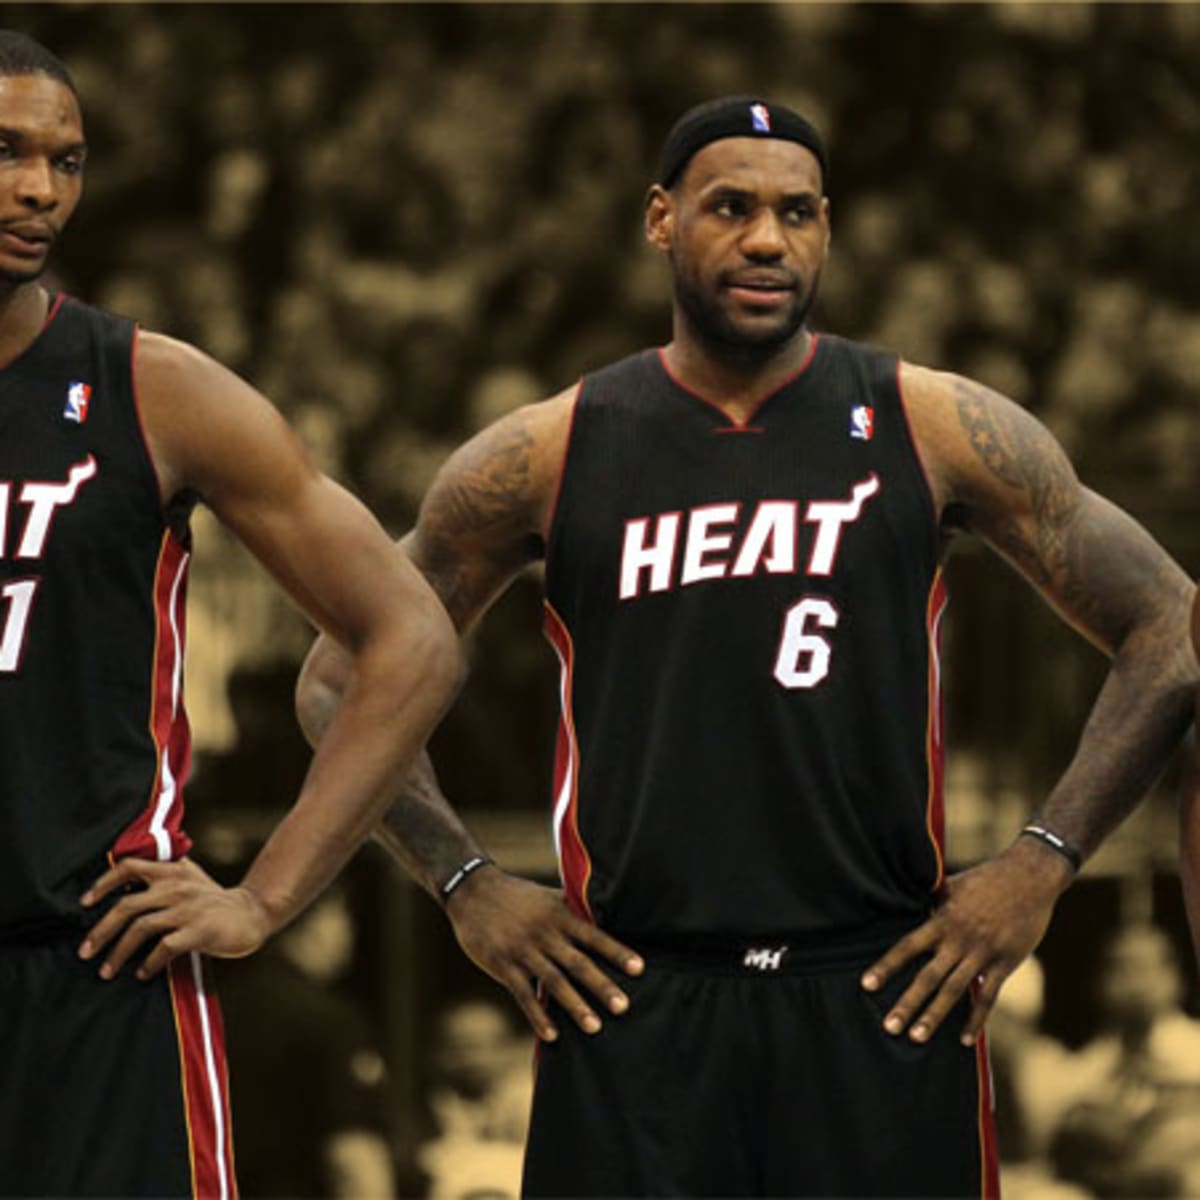 New all-black Miami Heat alternate jersey highlight of media day